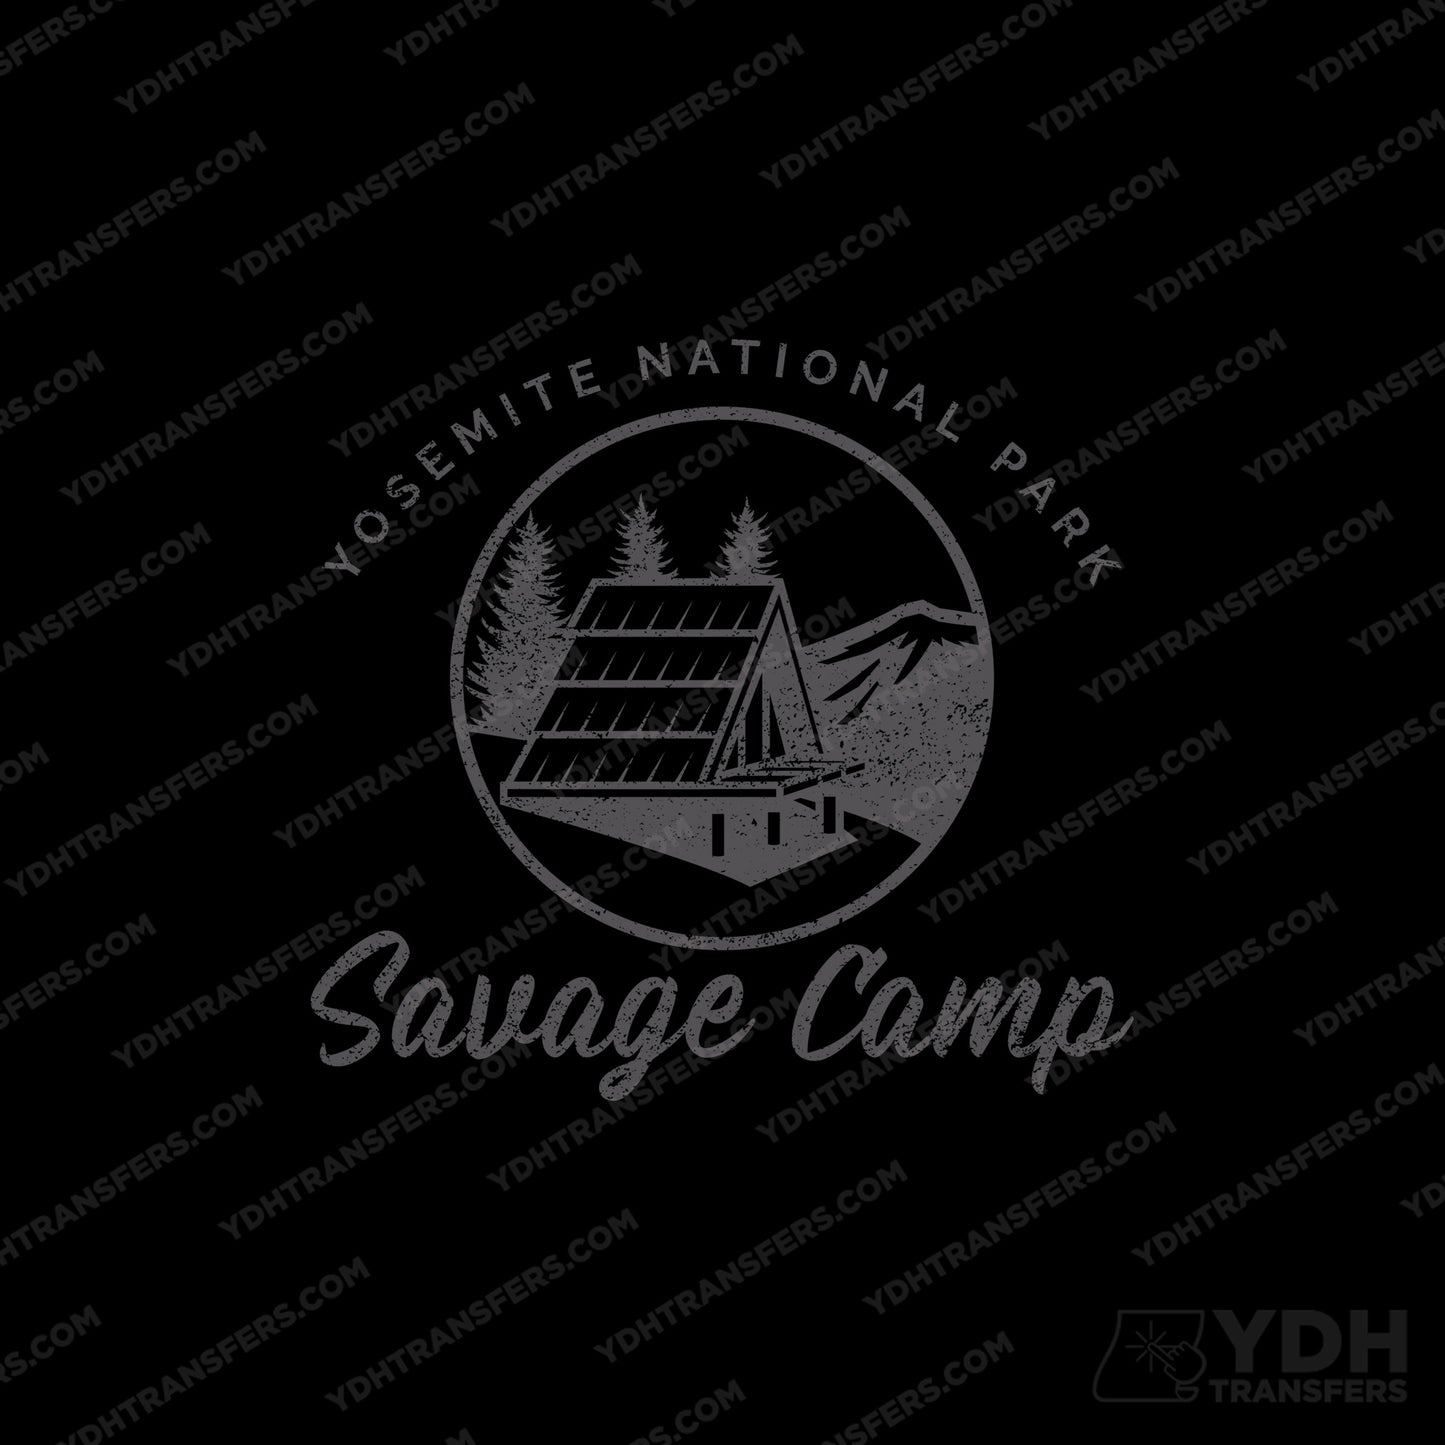 Yosemite Savage Camp Full Color Transfer